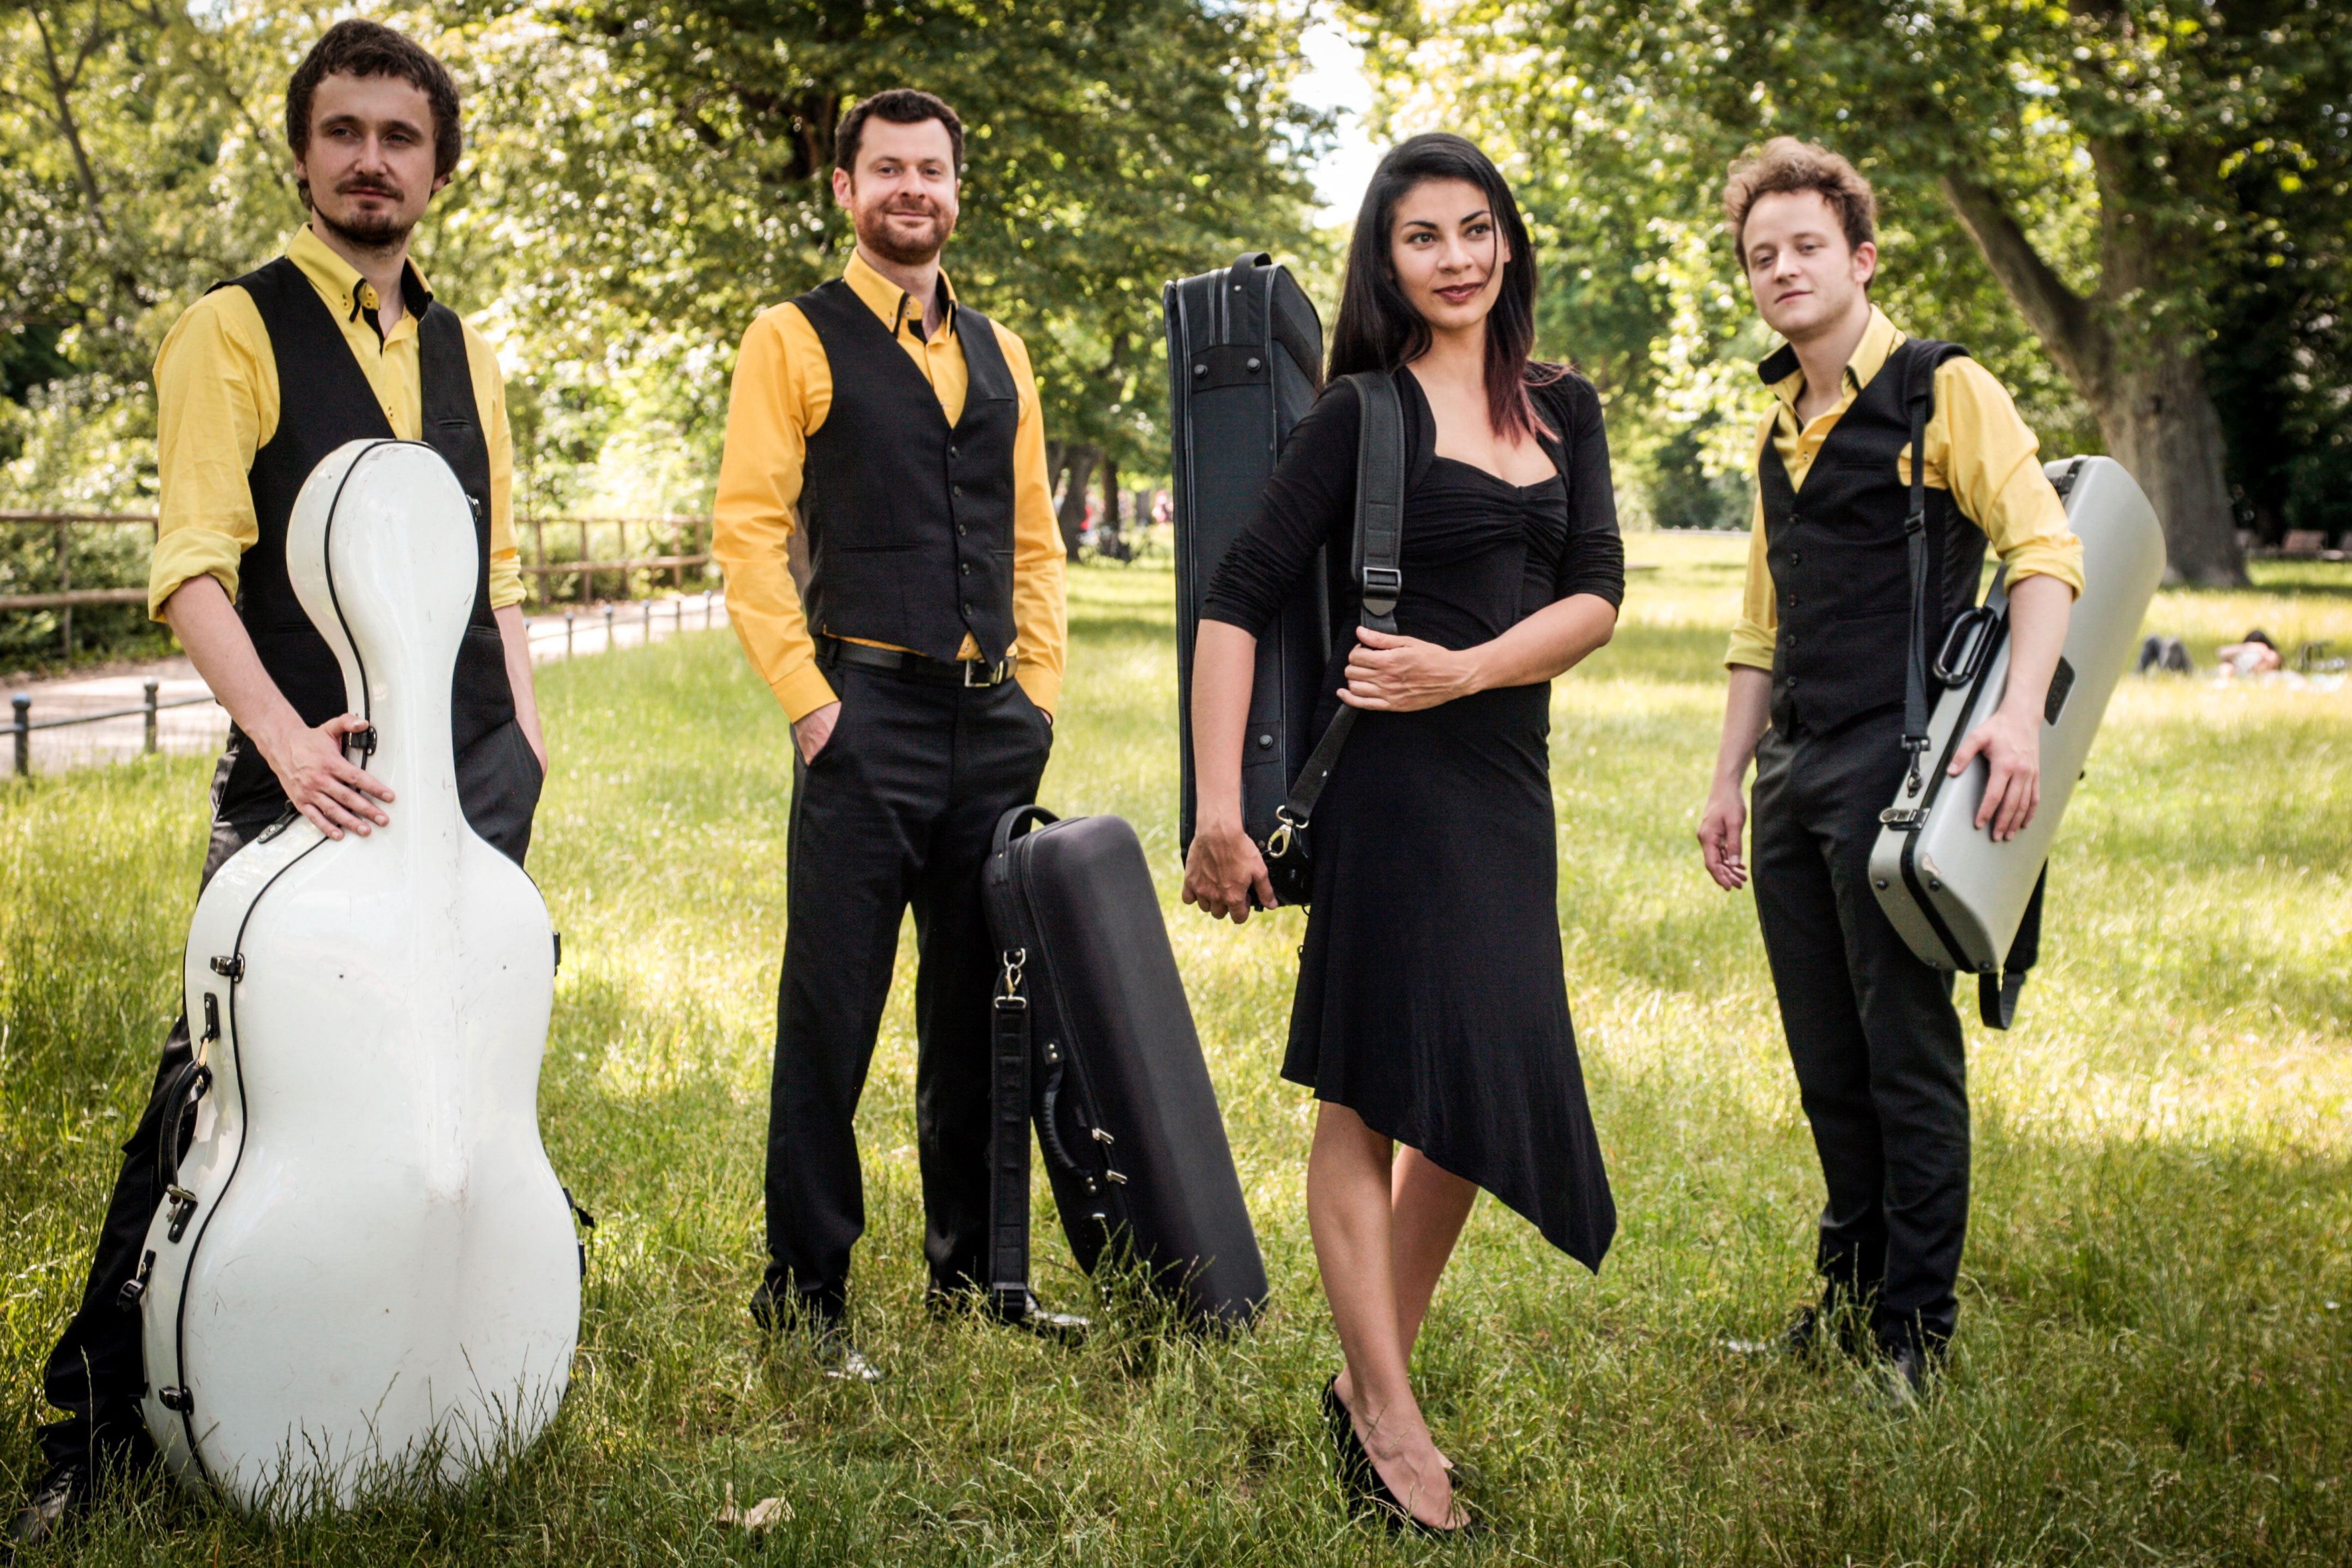 Feuerbach Quartett - Gruppenfoto